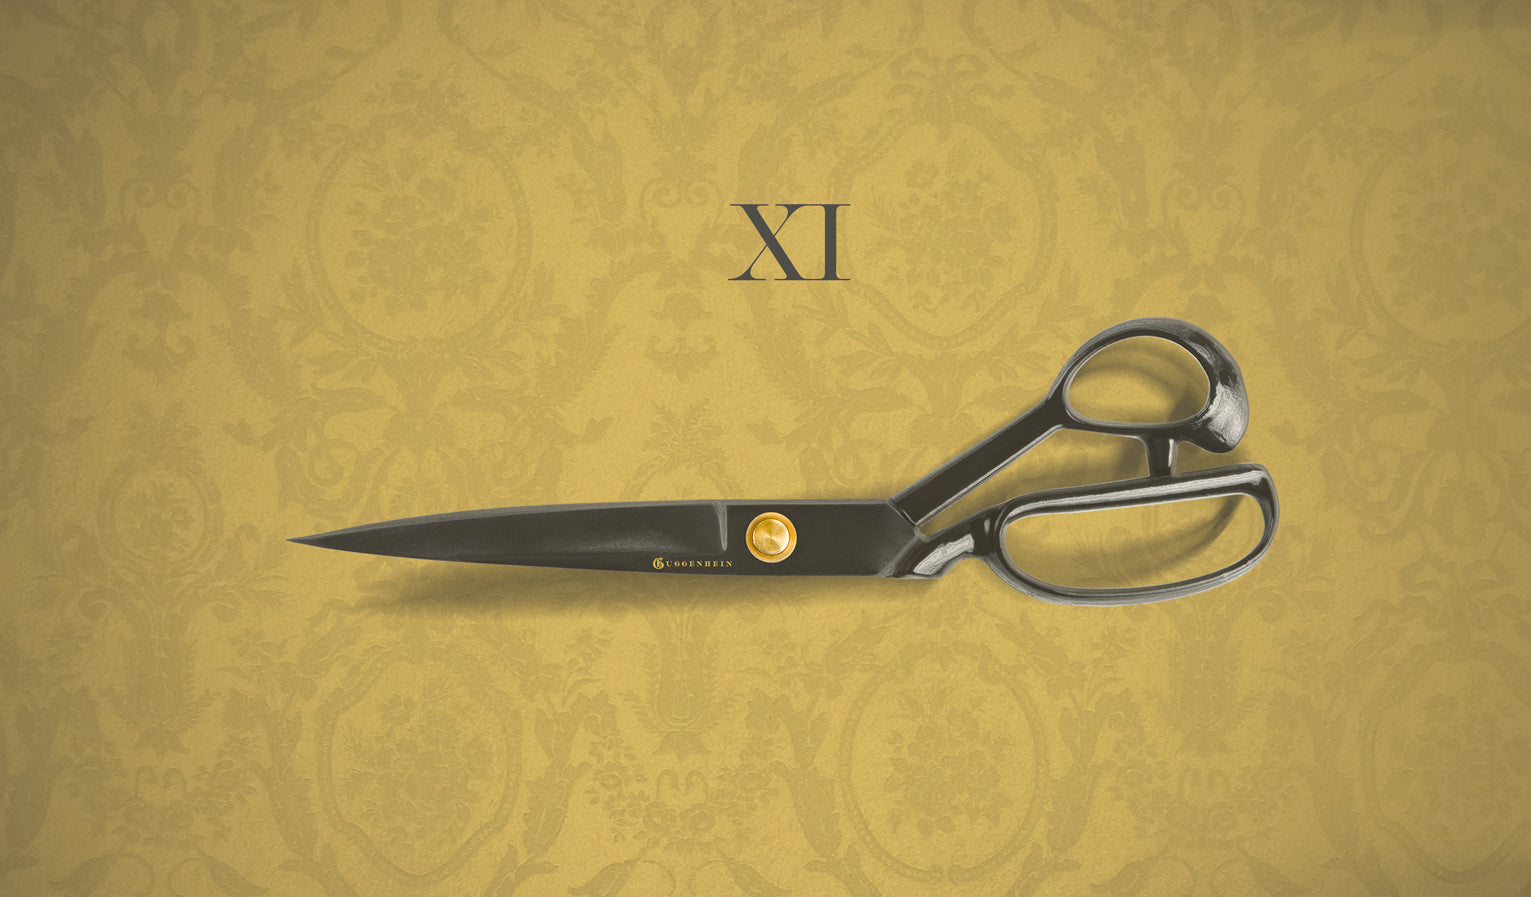 Guggenhein Scissor Review/Unboxing ✂ Why Professional Tailors Use Guggenheim  Scissors? Carmen Salomé 